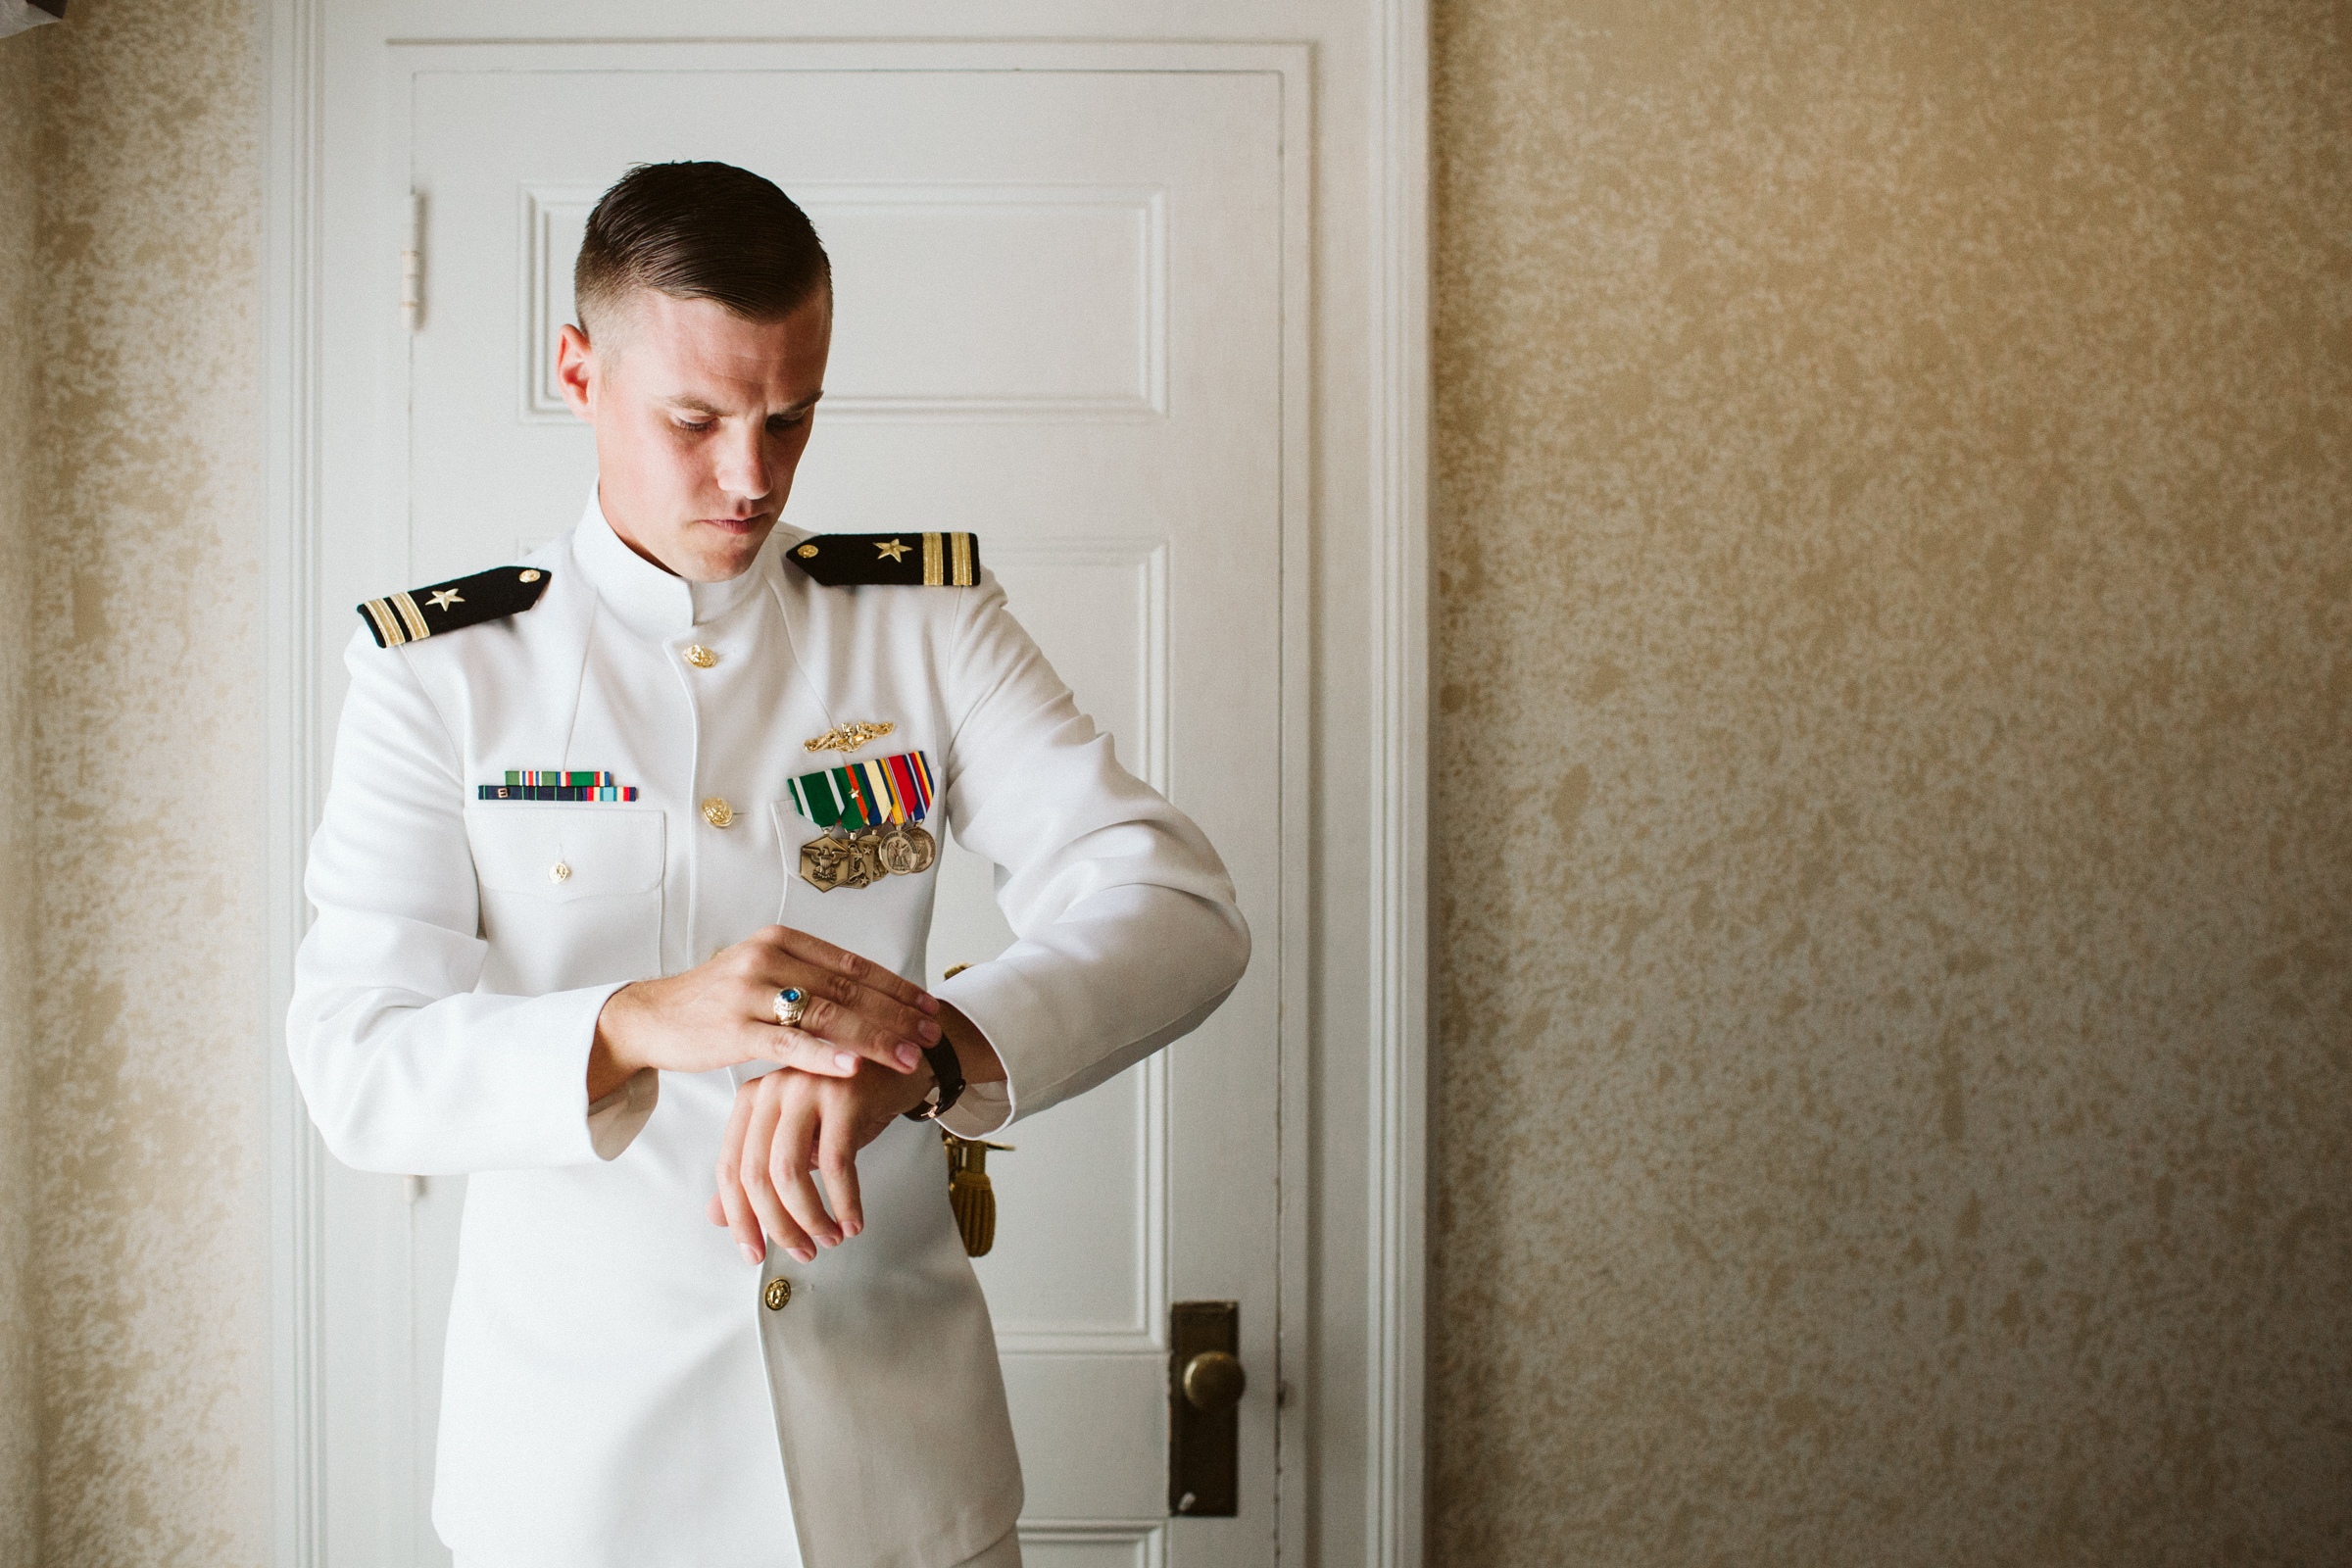 Groom in uniform putting on watch before wedding